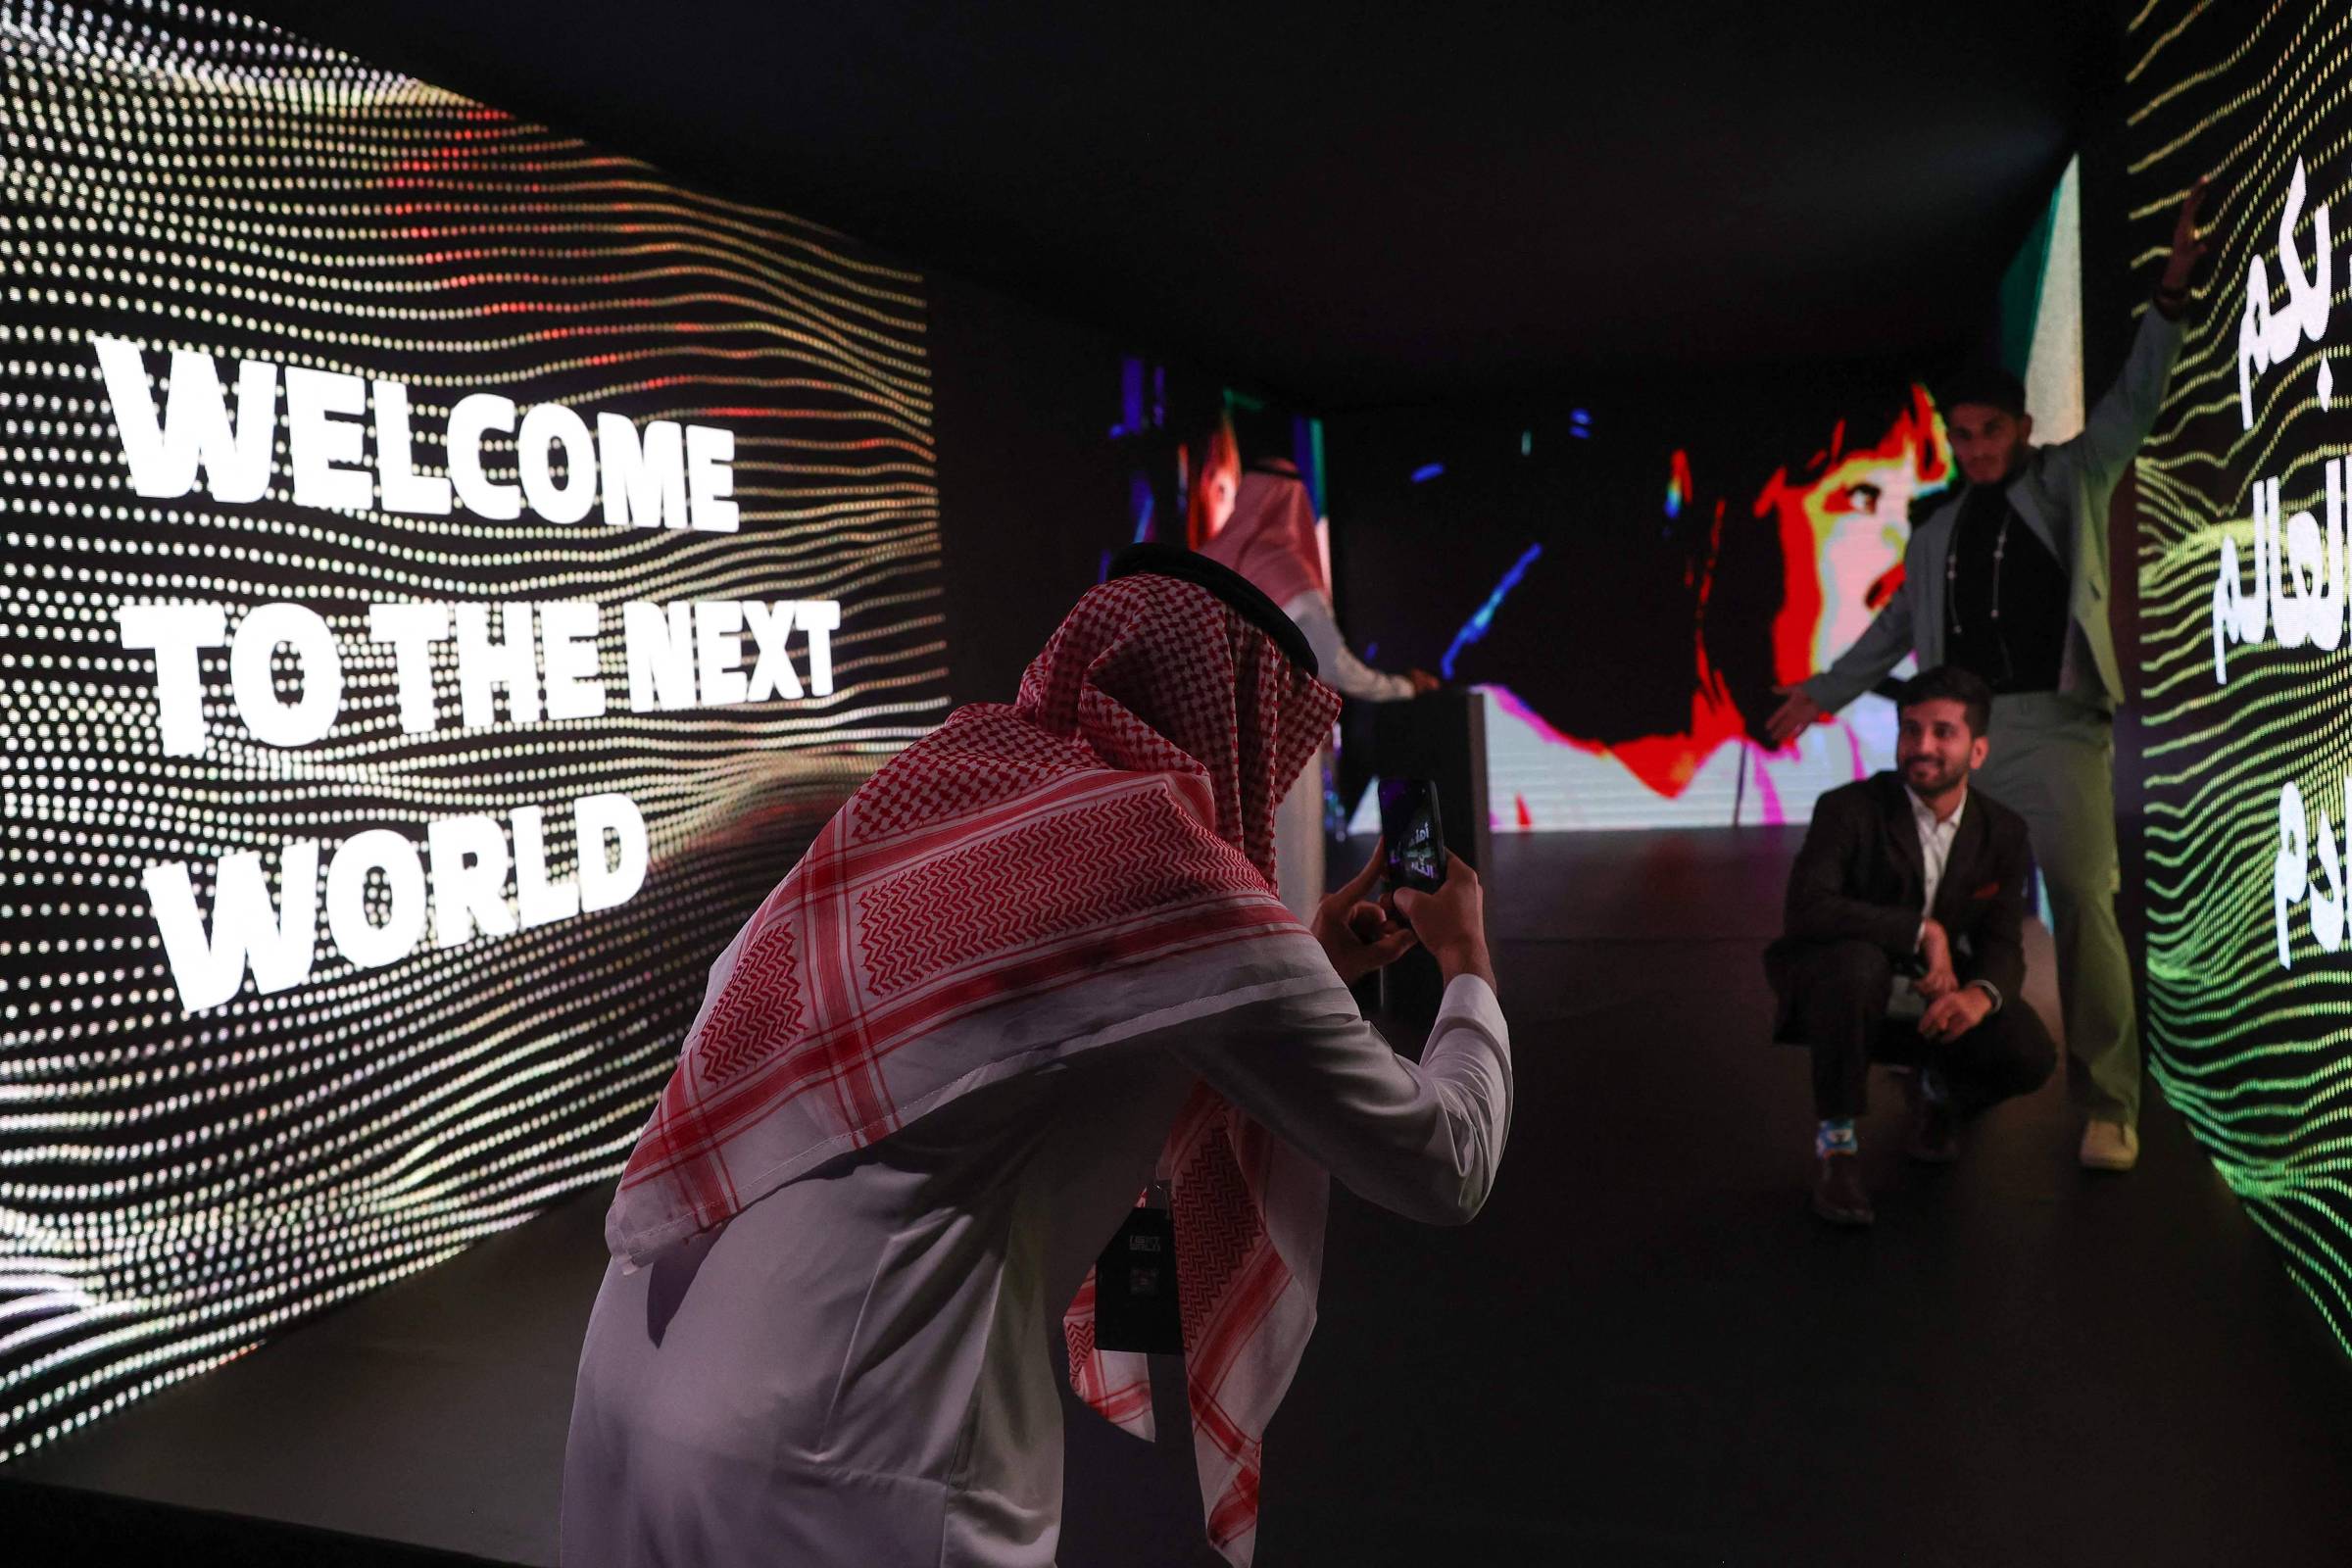 Saudi Arabia spends billions on measures to dominate global gaming industry